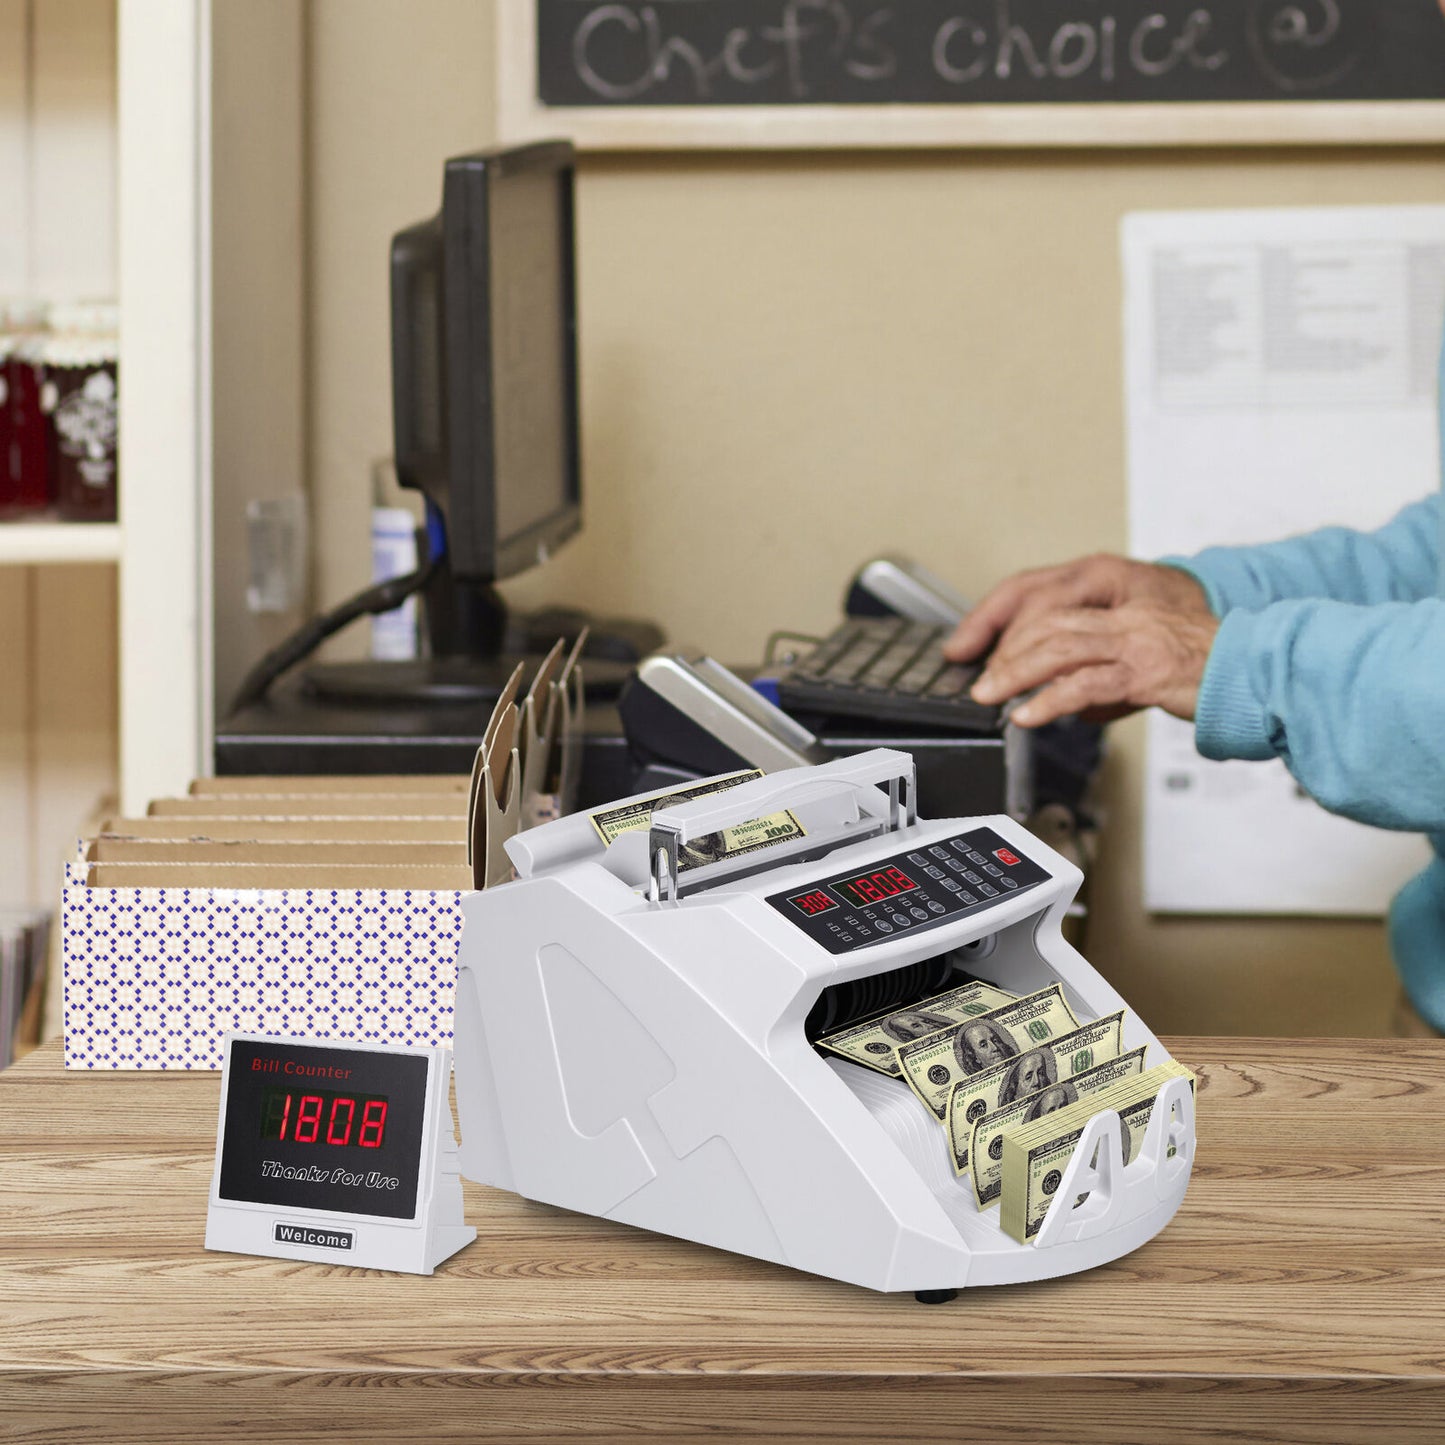 Money Bill Counter Machine Cash Counting Counterfeit Detector UV MG Bank Checker